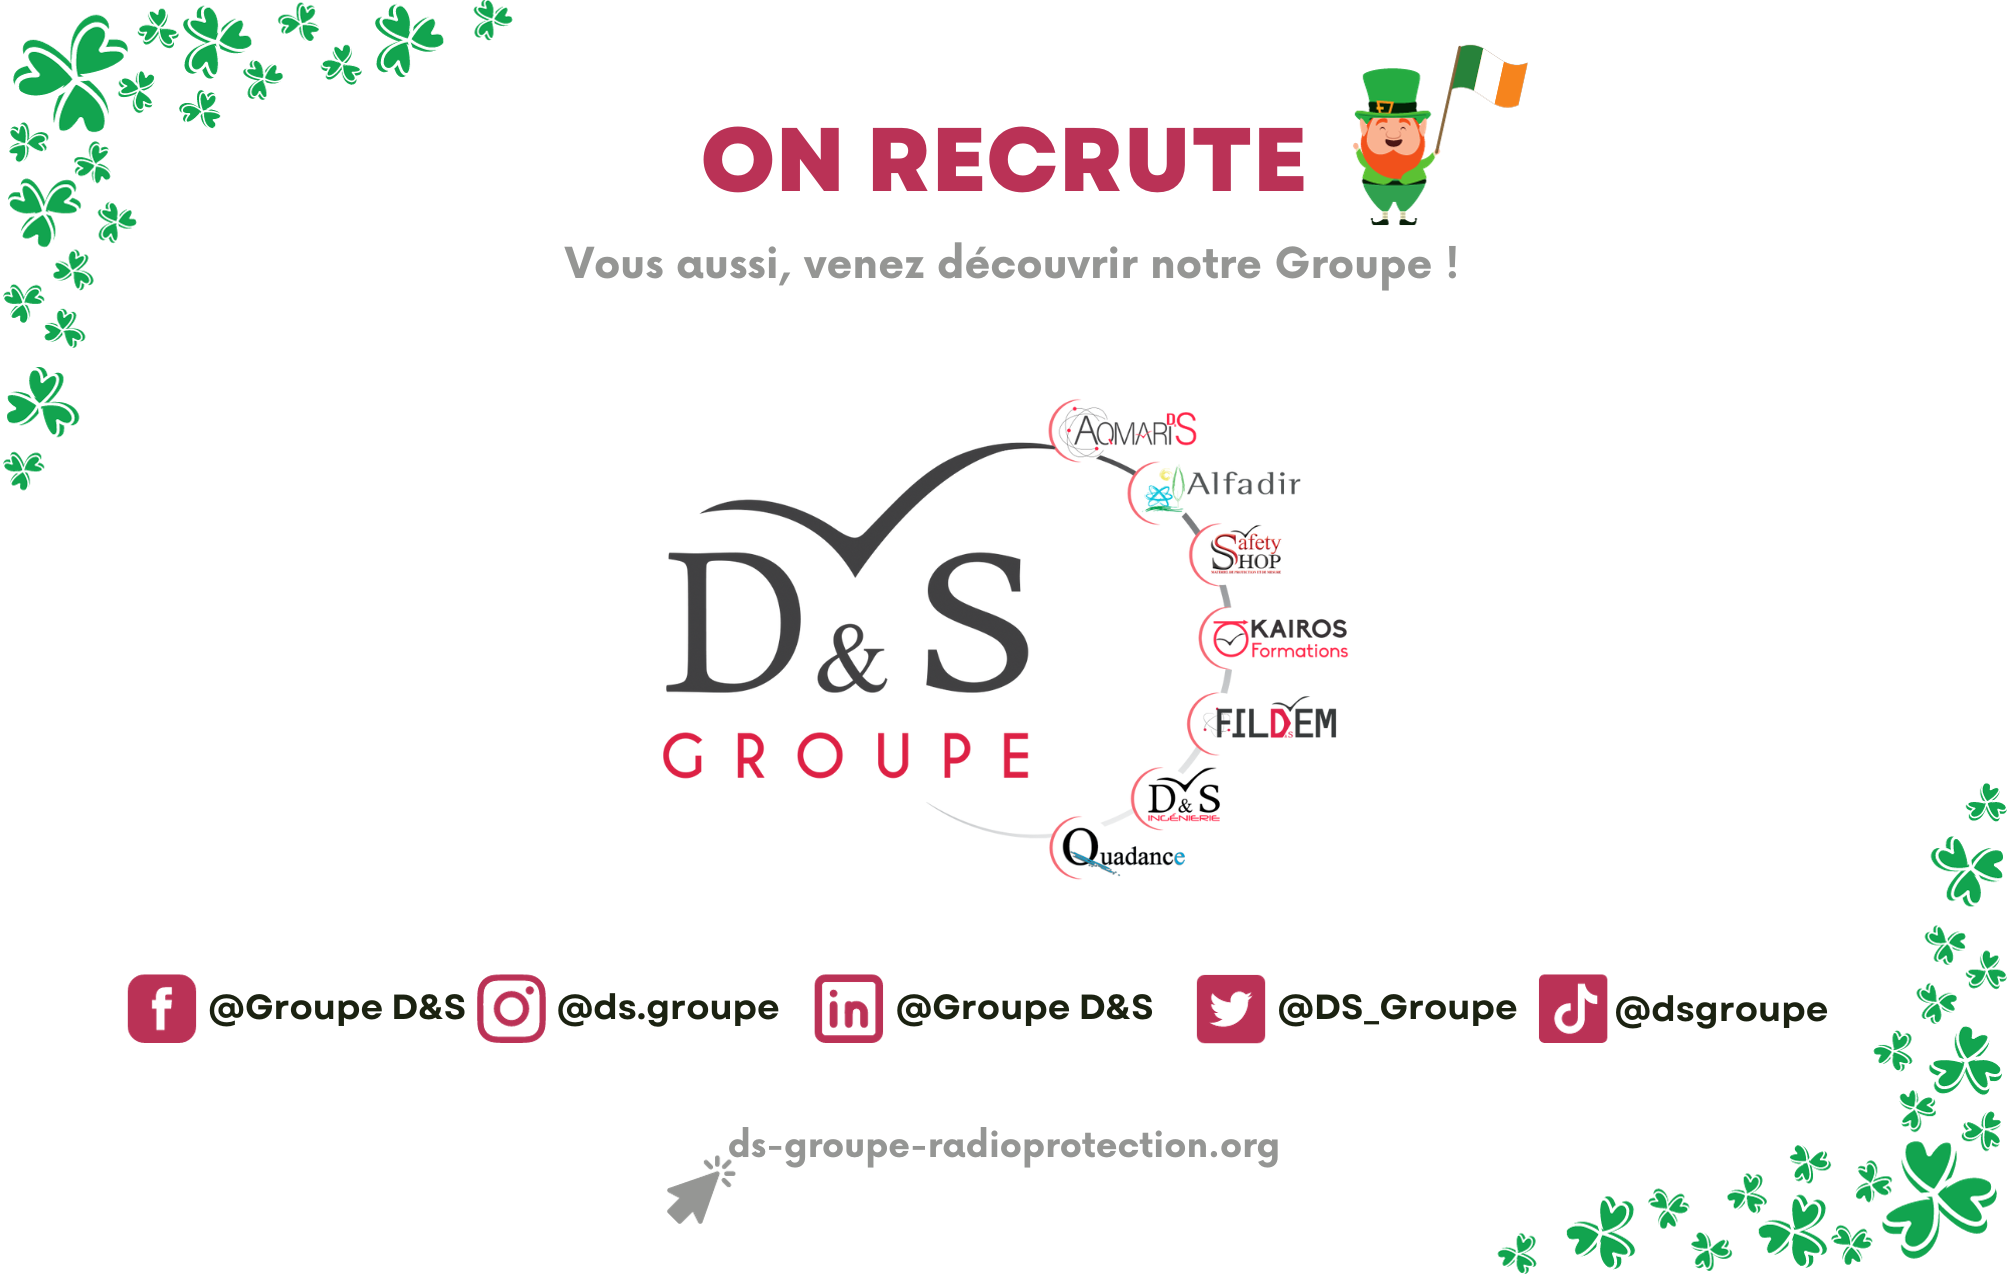 D&S Groupe Recrute